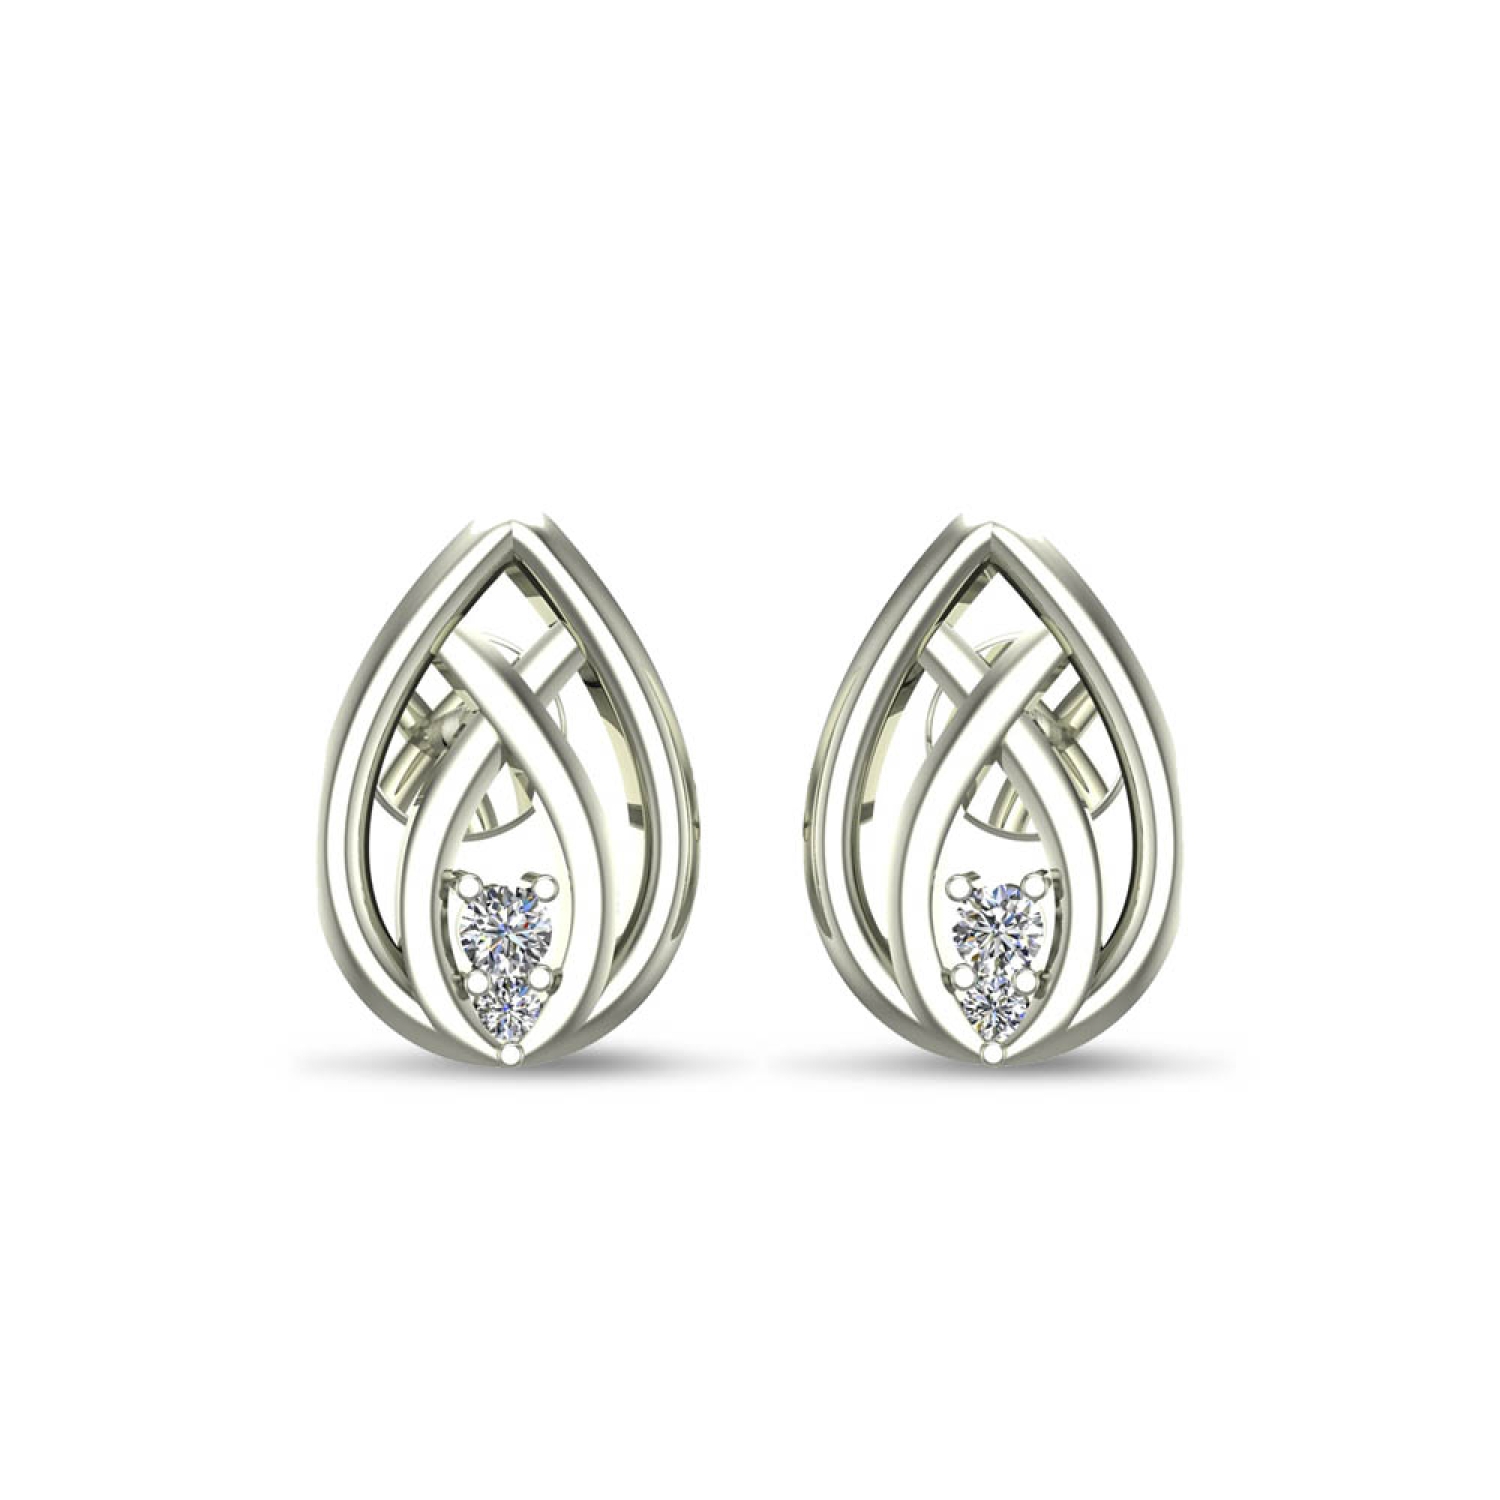 Platinum D Color Internally Flawless Diamond Stud Earrings, 1 Carat  Diamonds Earrings, GIA Certified Unique Handmade